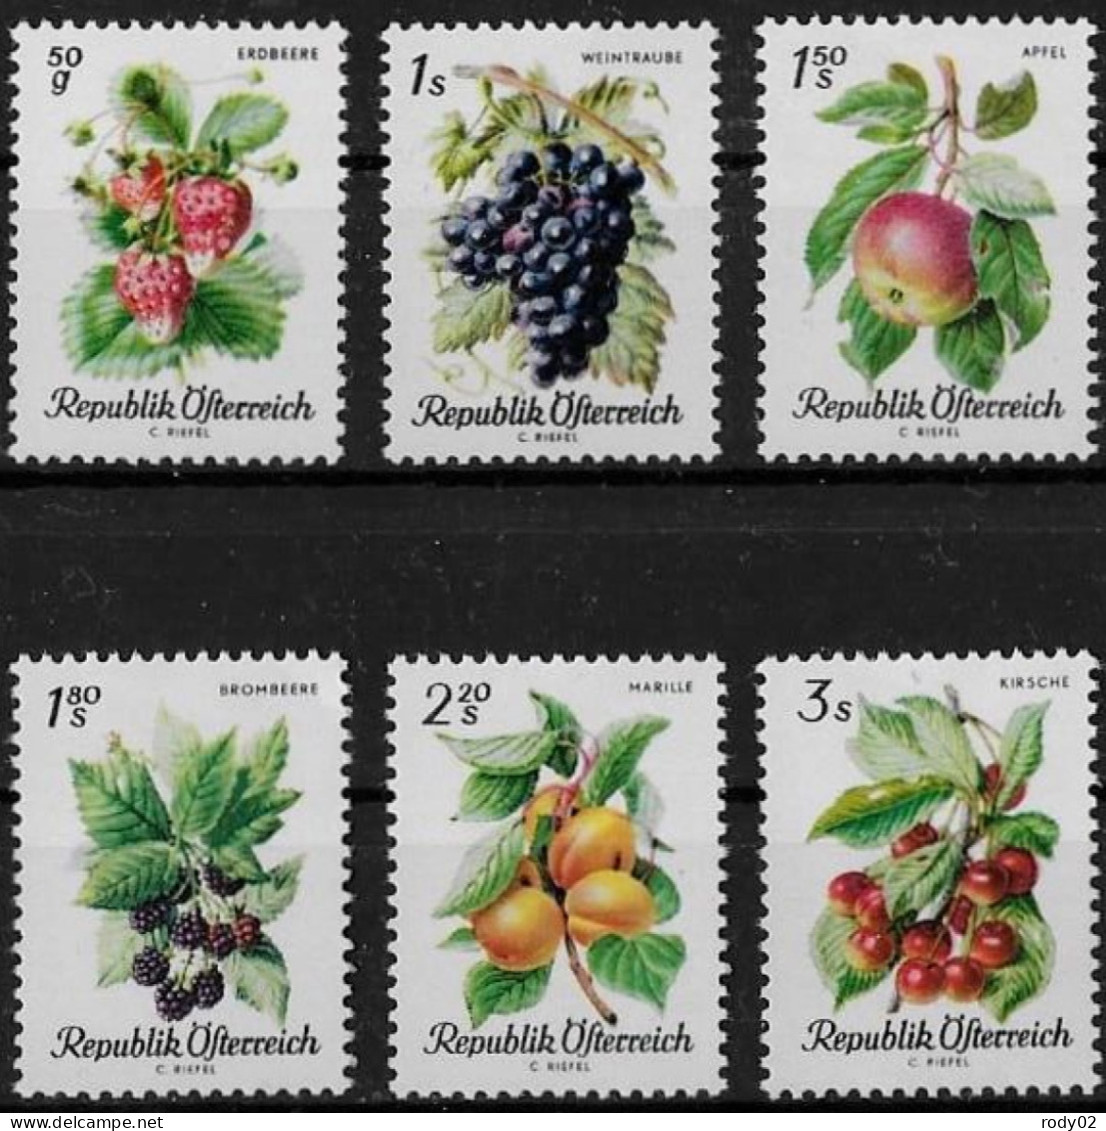 AUTRICHE - FRUITS - N° 1058 A 1063 - NEUF** MNH - Frutas